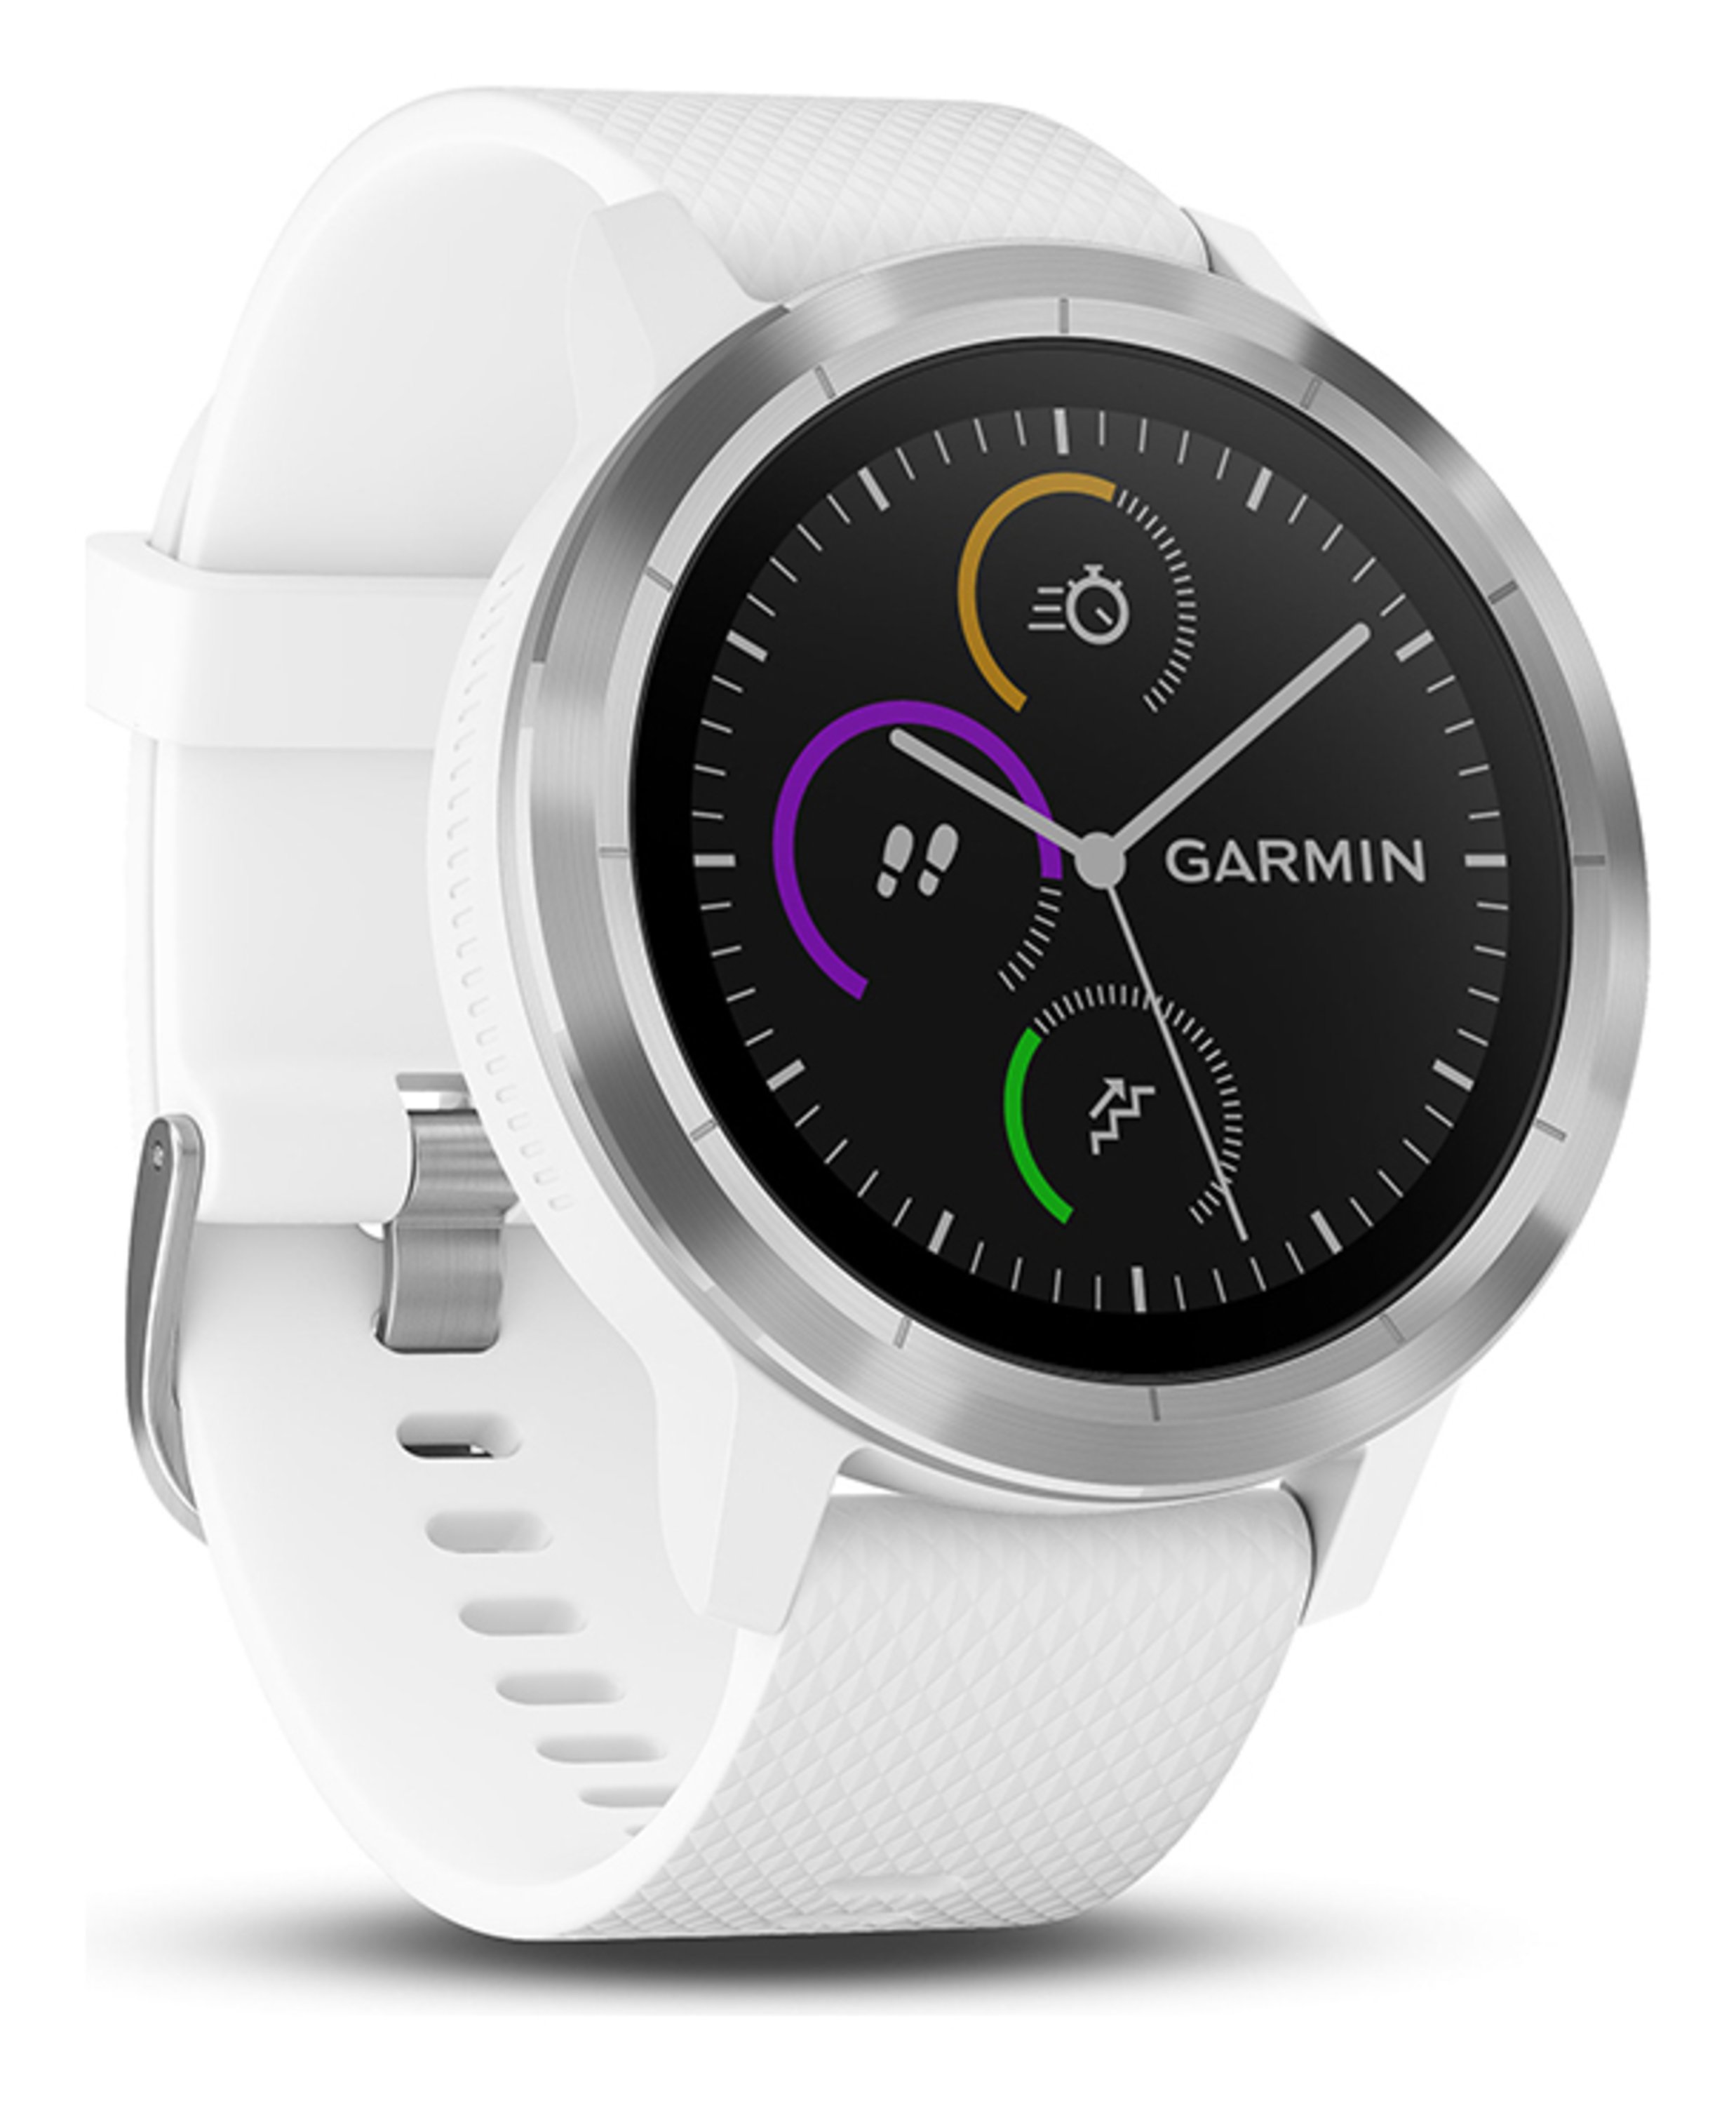 Garmin Vivoactive 3 GPS Smart Watch Review